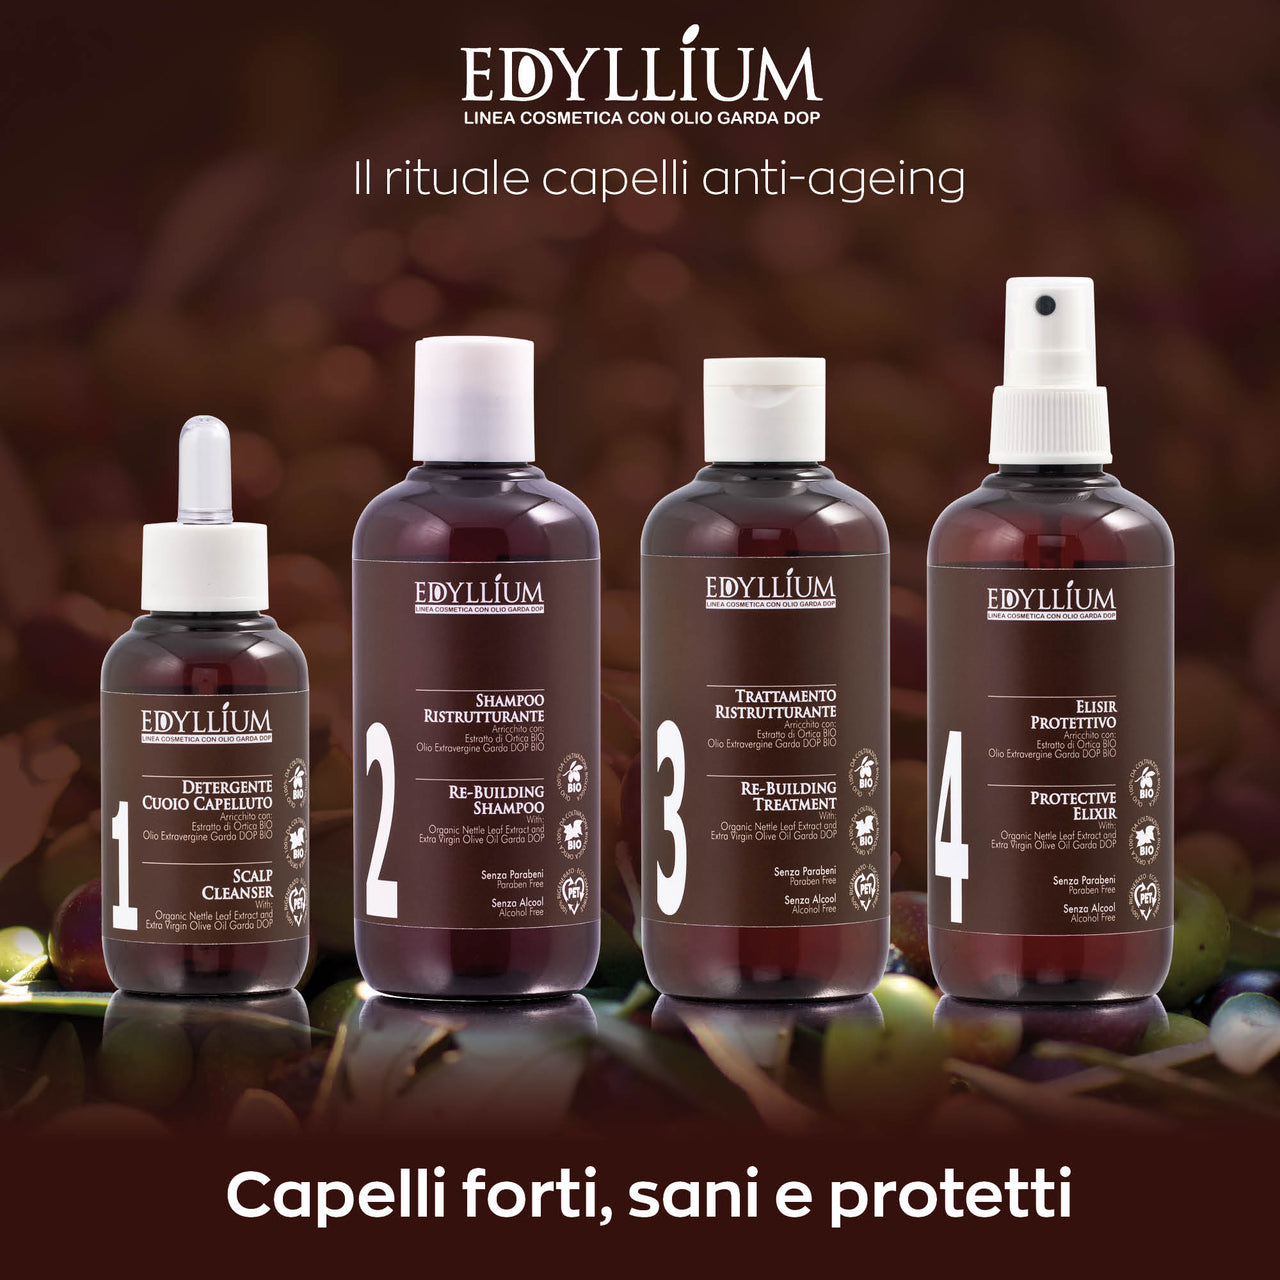 Edyllium Detergente Purificante Cuoio Capelluto - Scalp cleanser - 100 ml